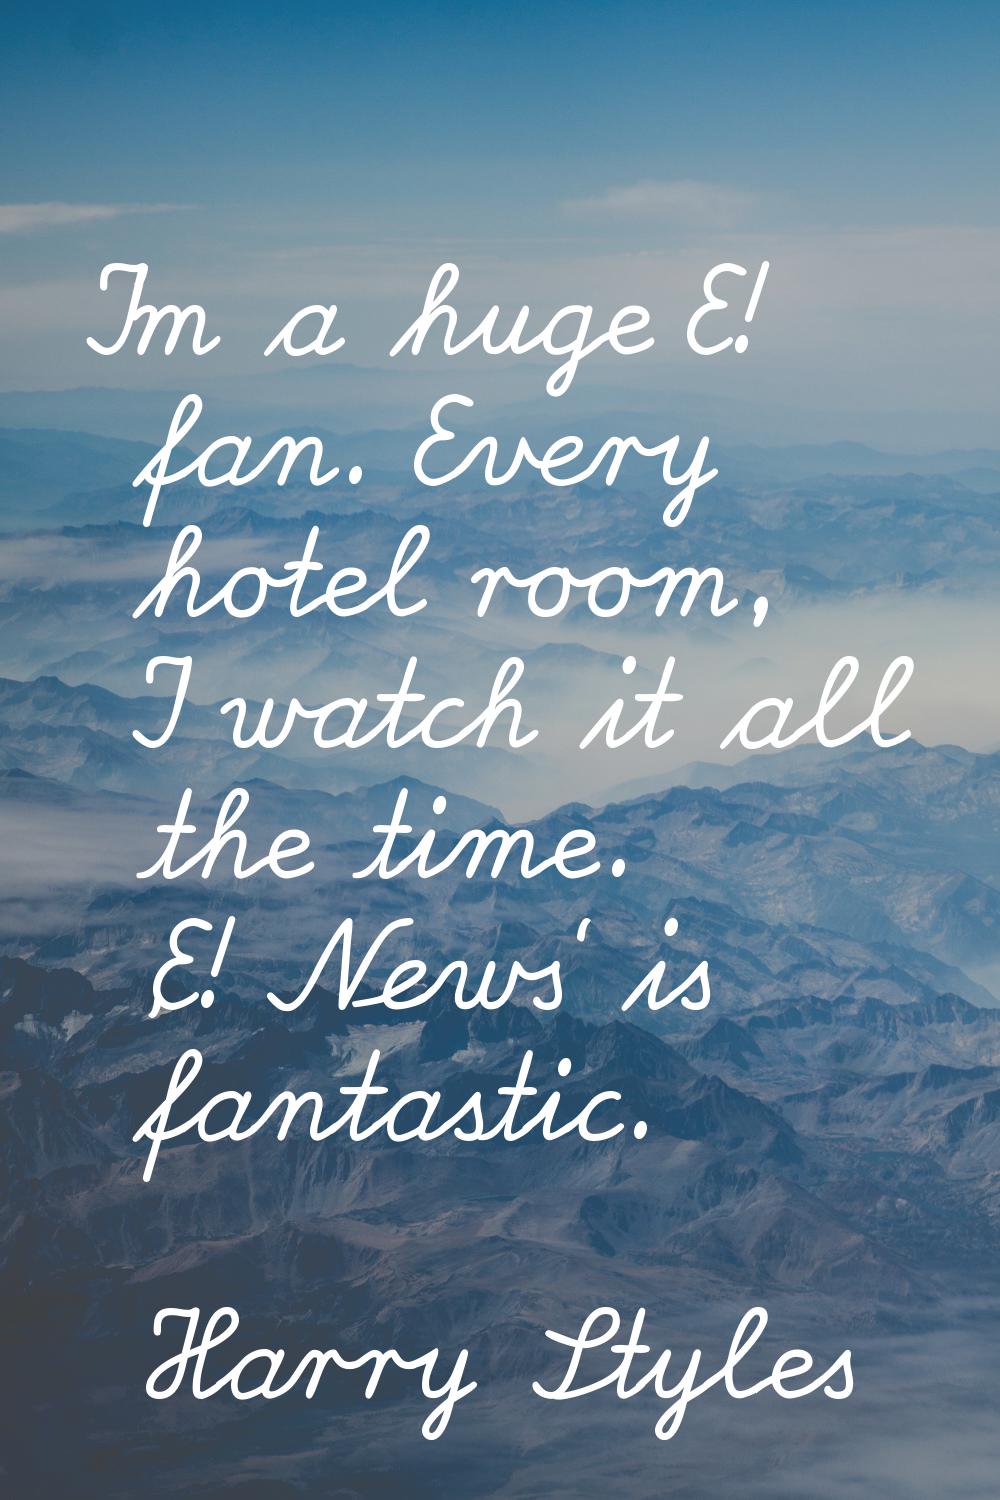 I'm a huge E! fan. Every hotel room, I watch it all the time. 'E! News' is fantastic.